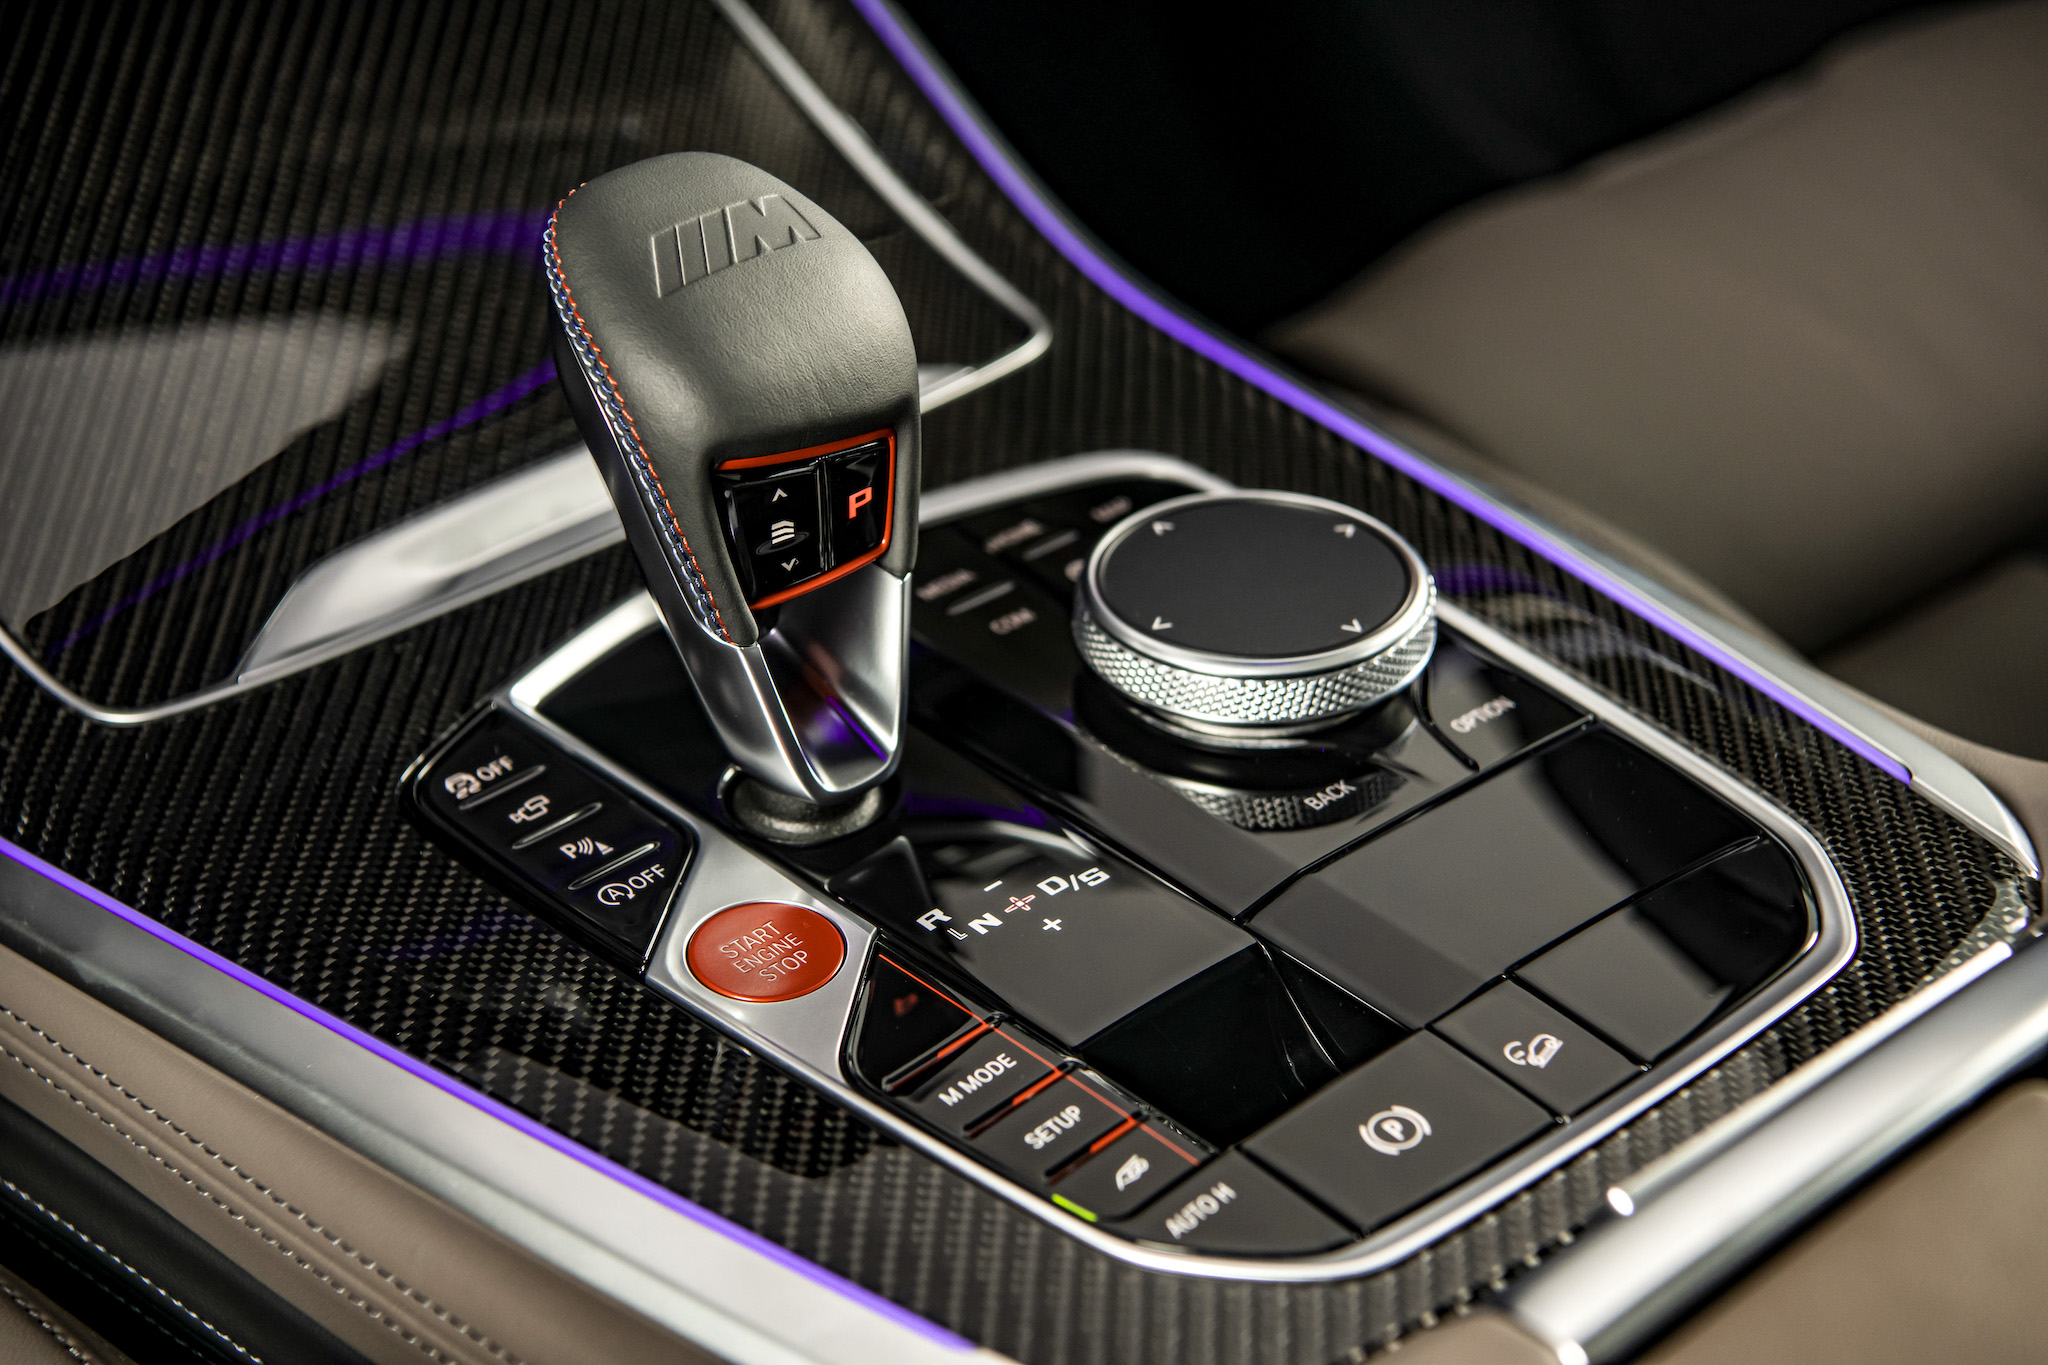 BMW X5 M 採用 Drivelogic 三段換檔邏輯，緊密順暢的換檔反應提升行駛舒適性與油耗效率。